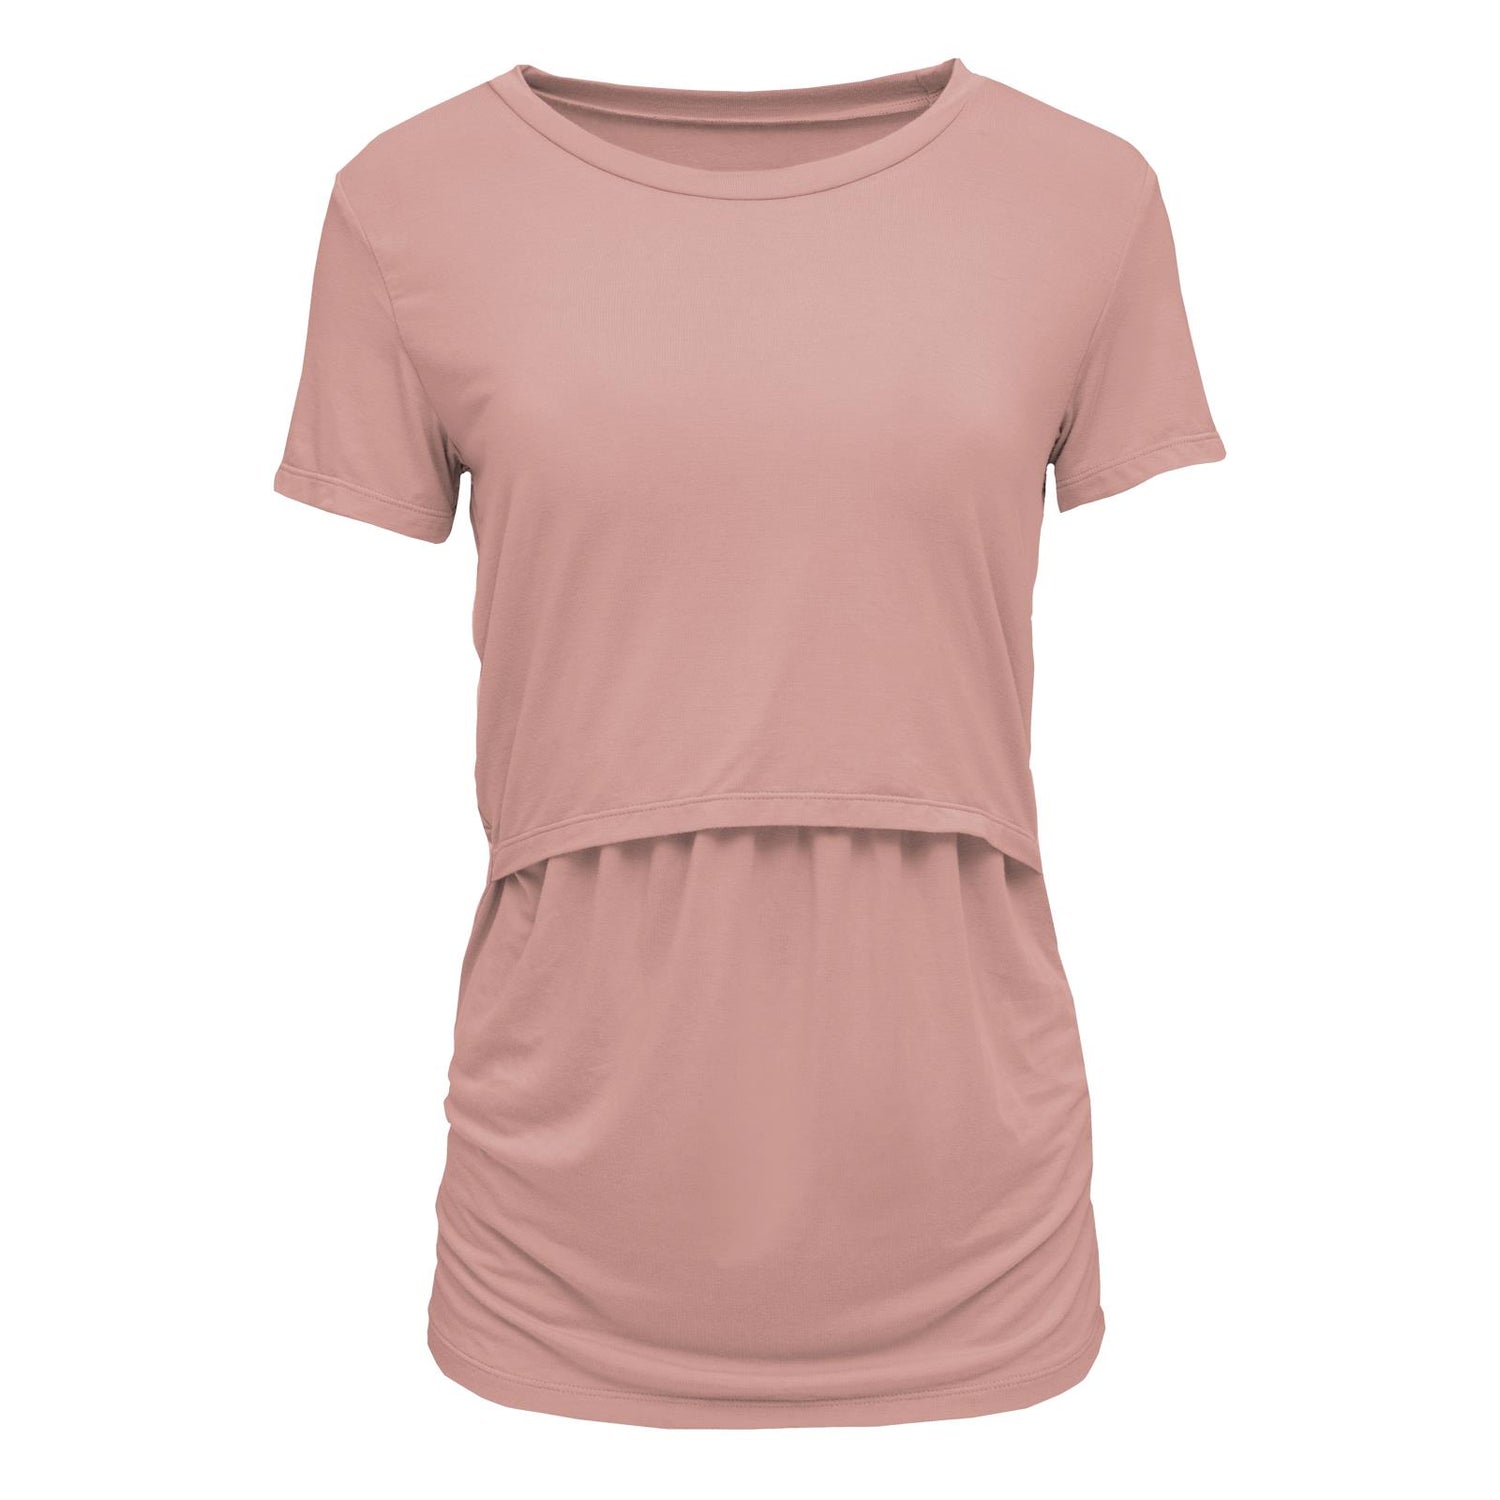 Women's Short Sleeve Nursing Tee in Blush